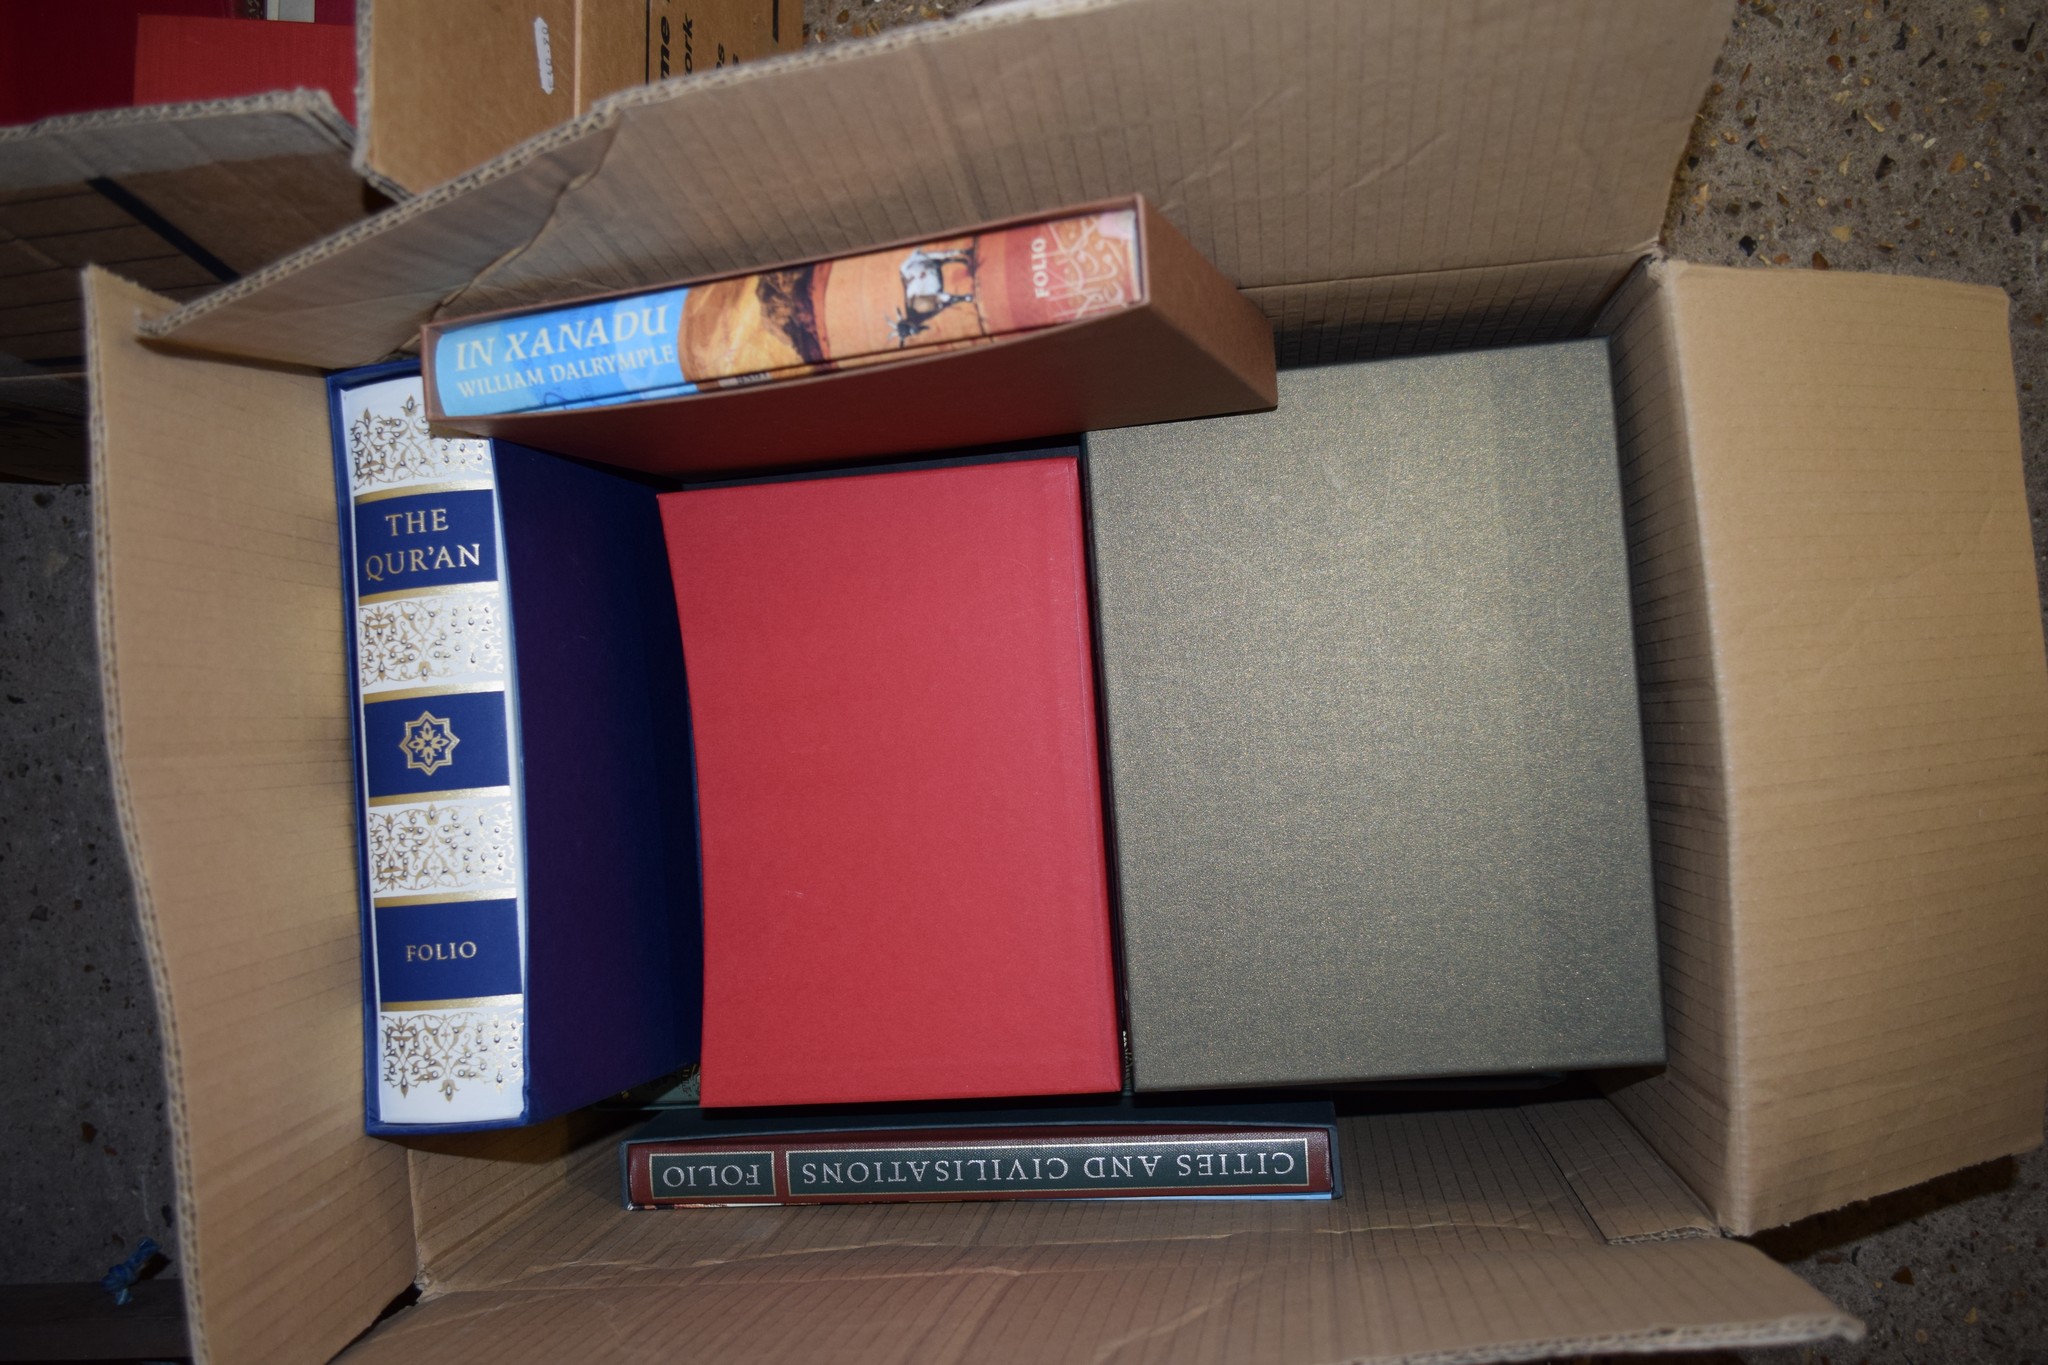 BOX OF BOOKS, VARIOUS HARDBACK TITLES INCLUDING XANADU BY WILLIAM DALRYMPLE